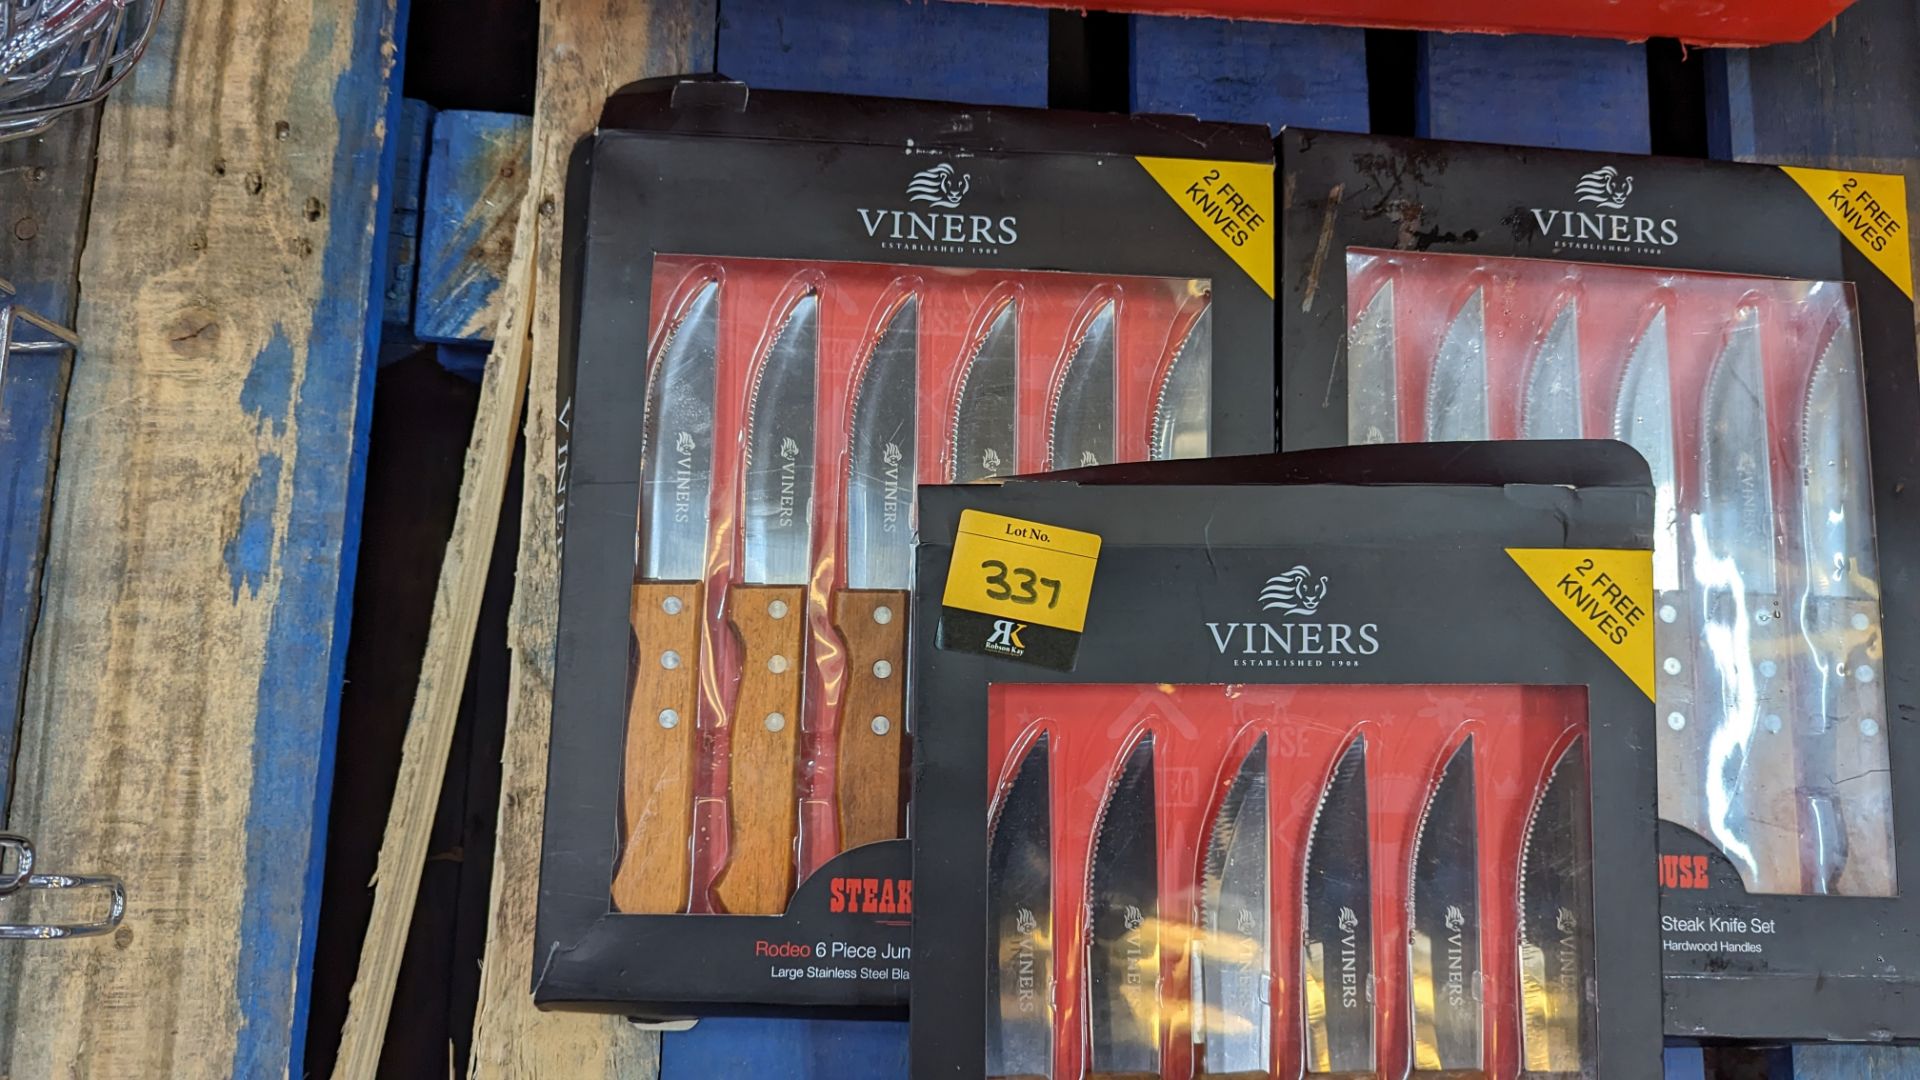 3 sets of Viners steakhouse jumbo steak knives - 18 knives in total - Image 4 of 5